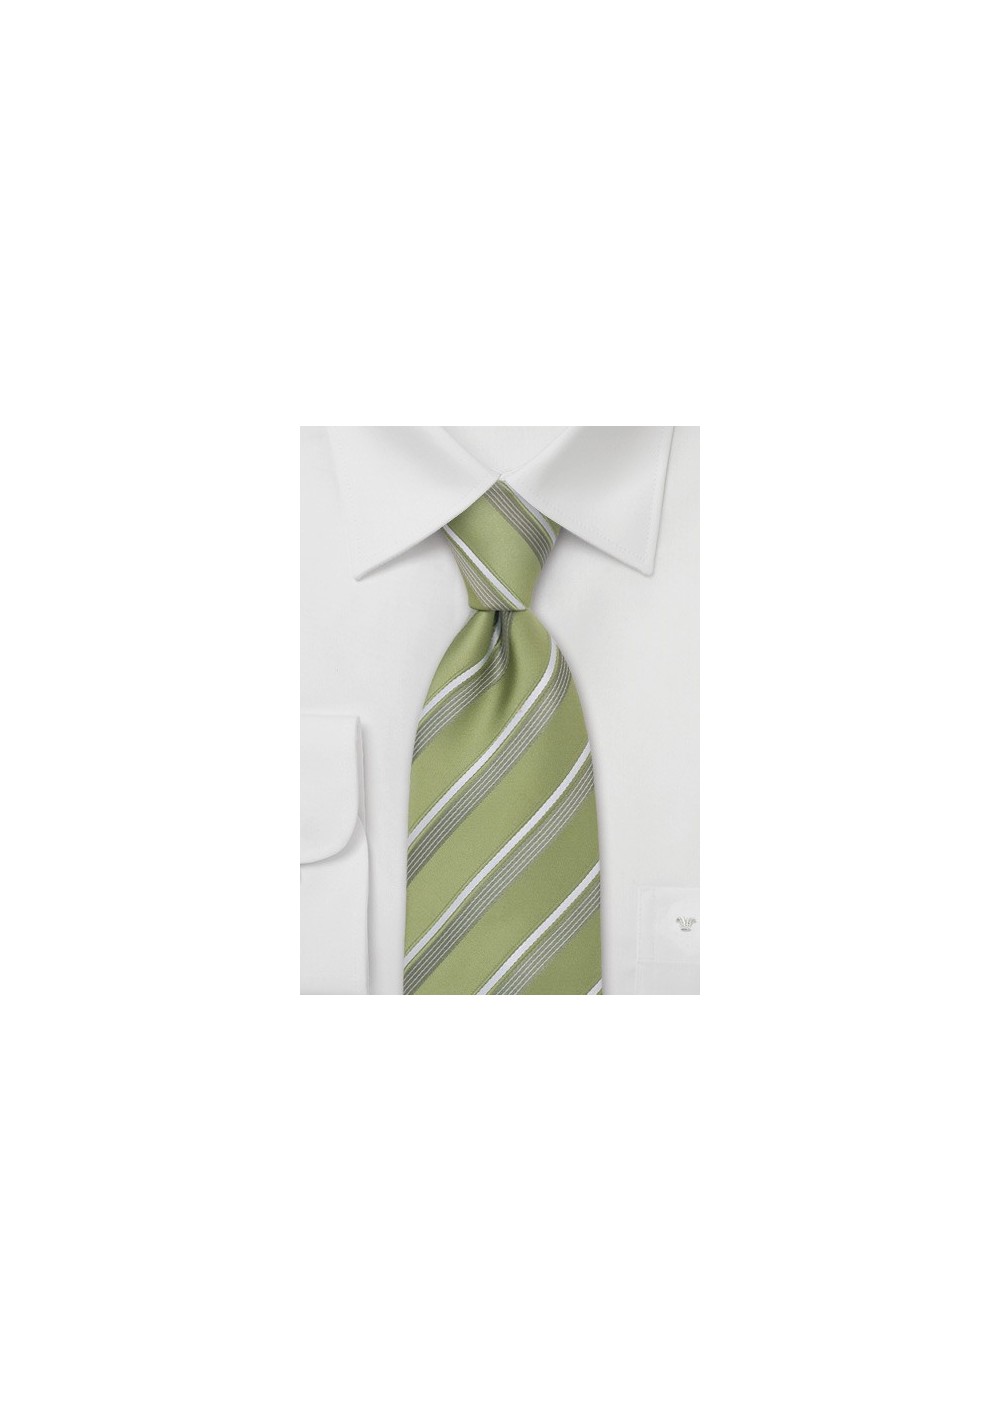 Tea-Green Striped Tie by Cavallieri